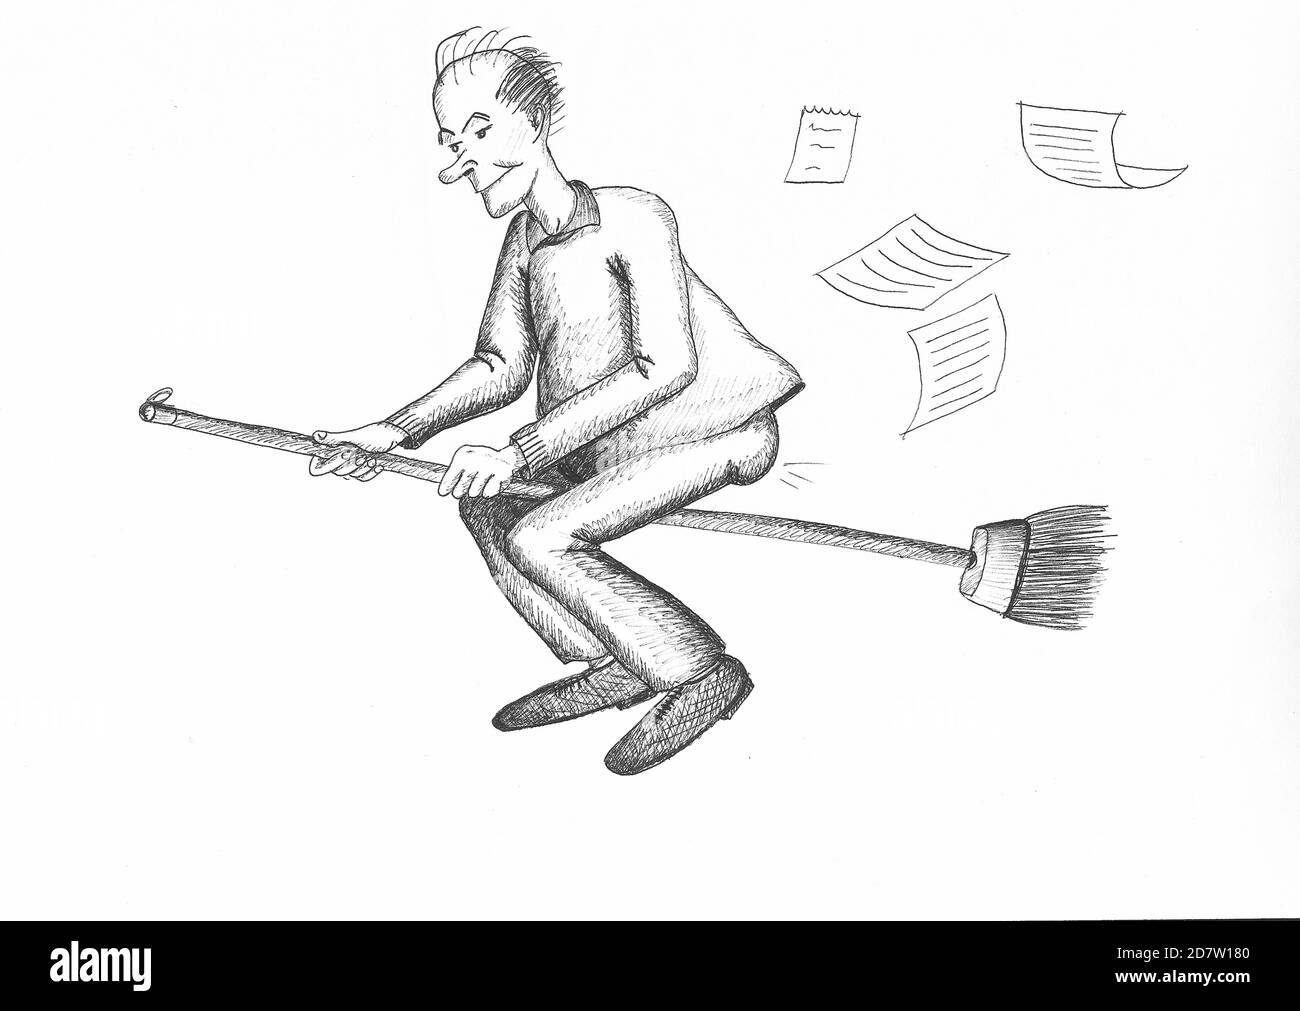 Wizard riding a broom. Illustration. Stock Photo